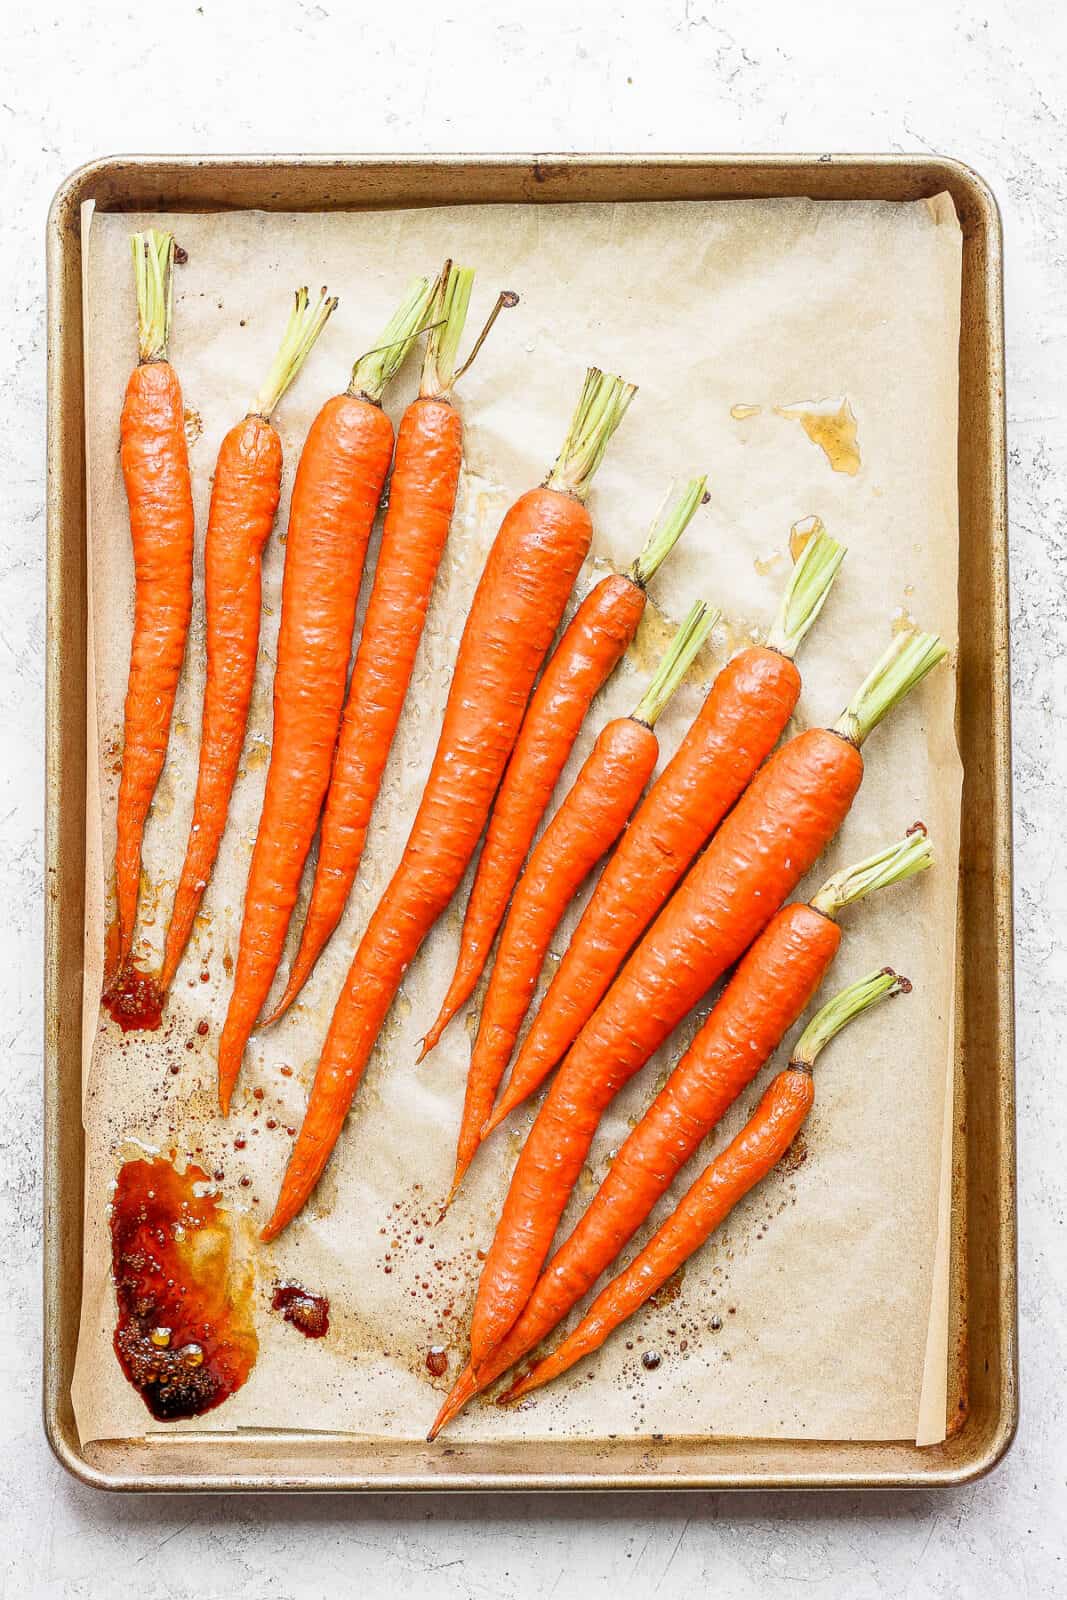 Whole roasted carrots on a baking sheet.